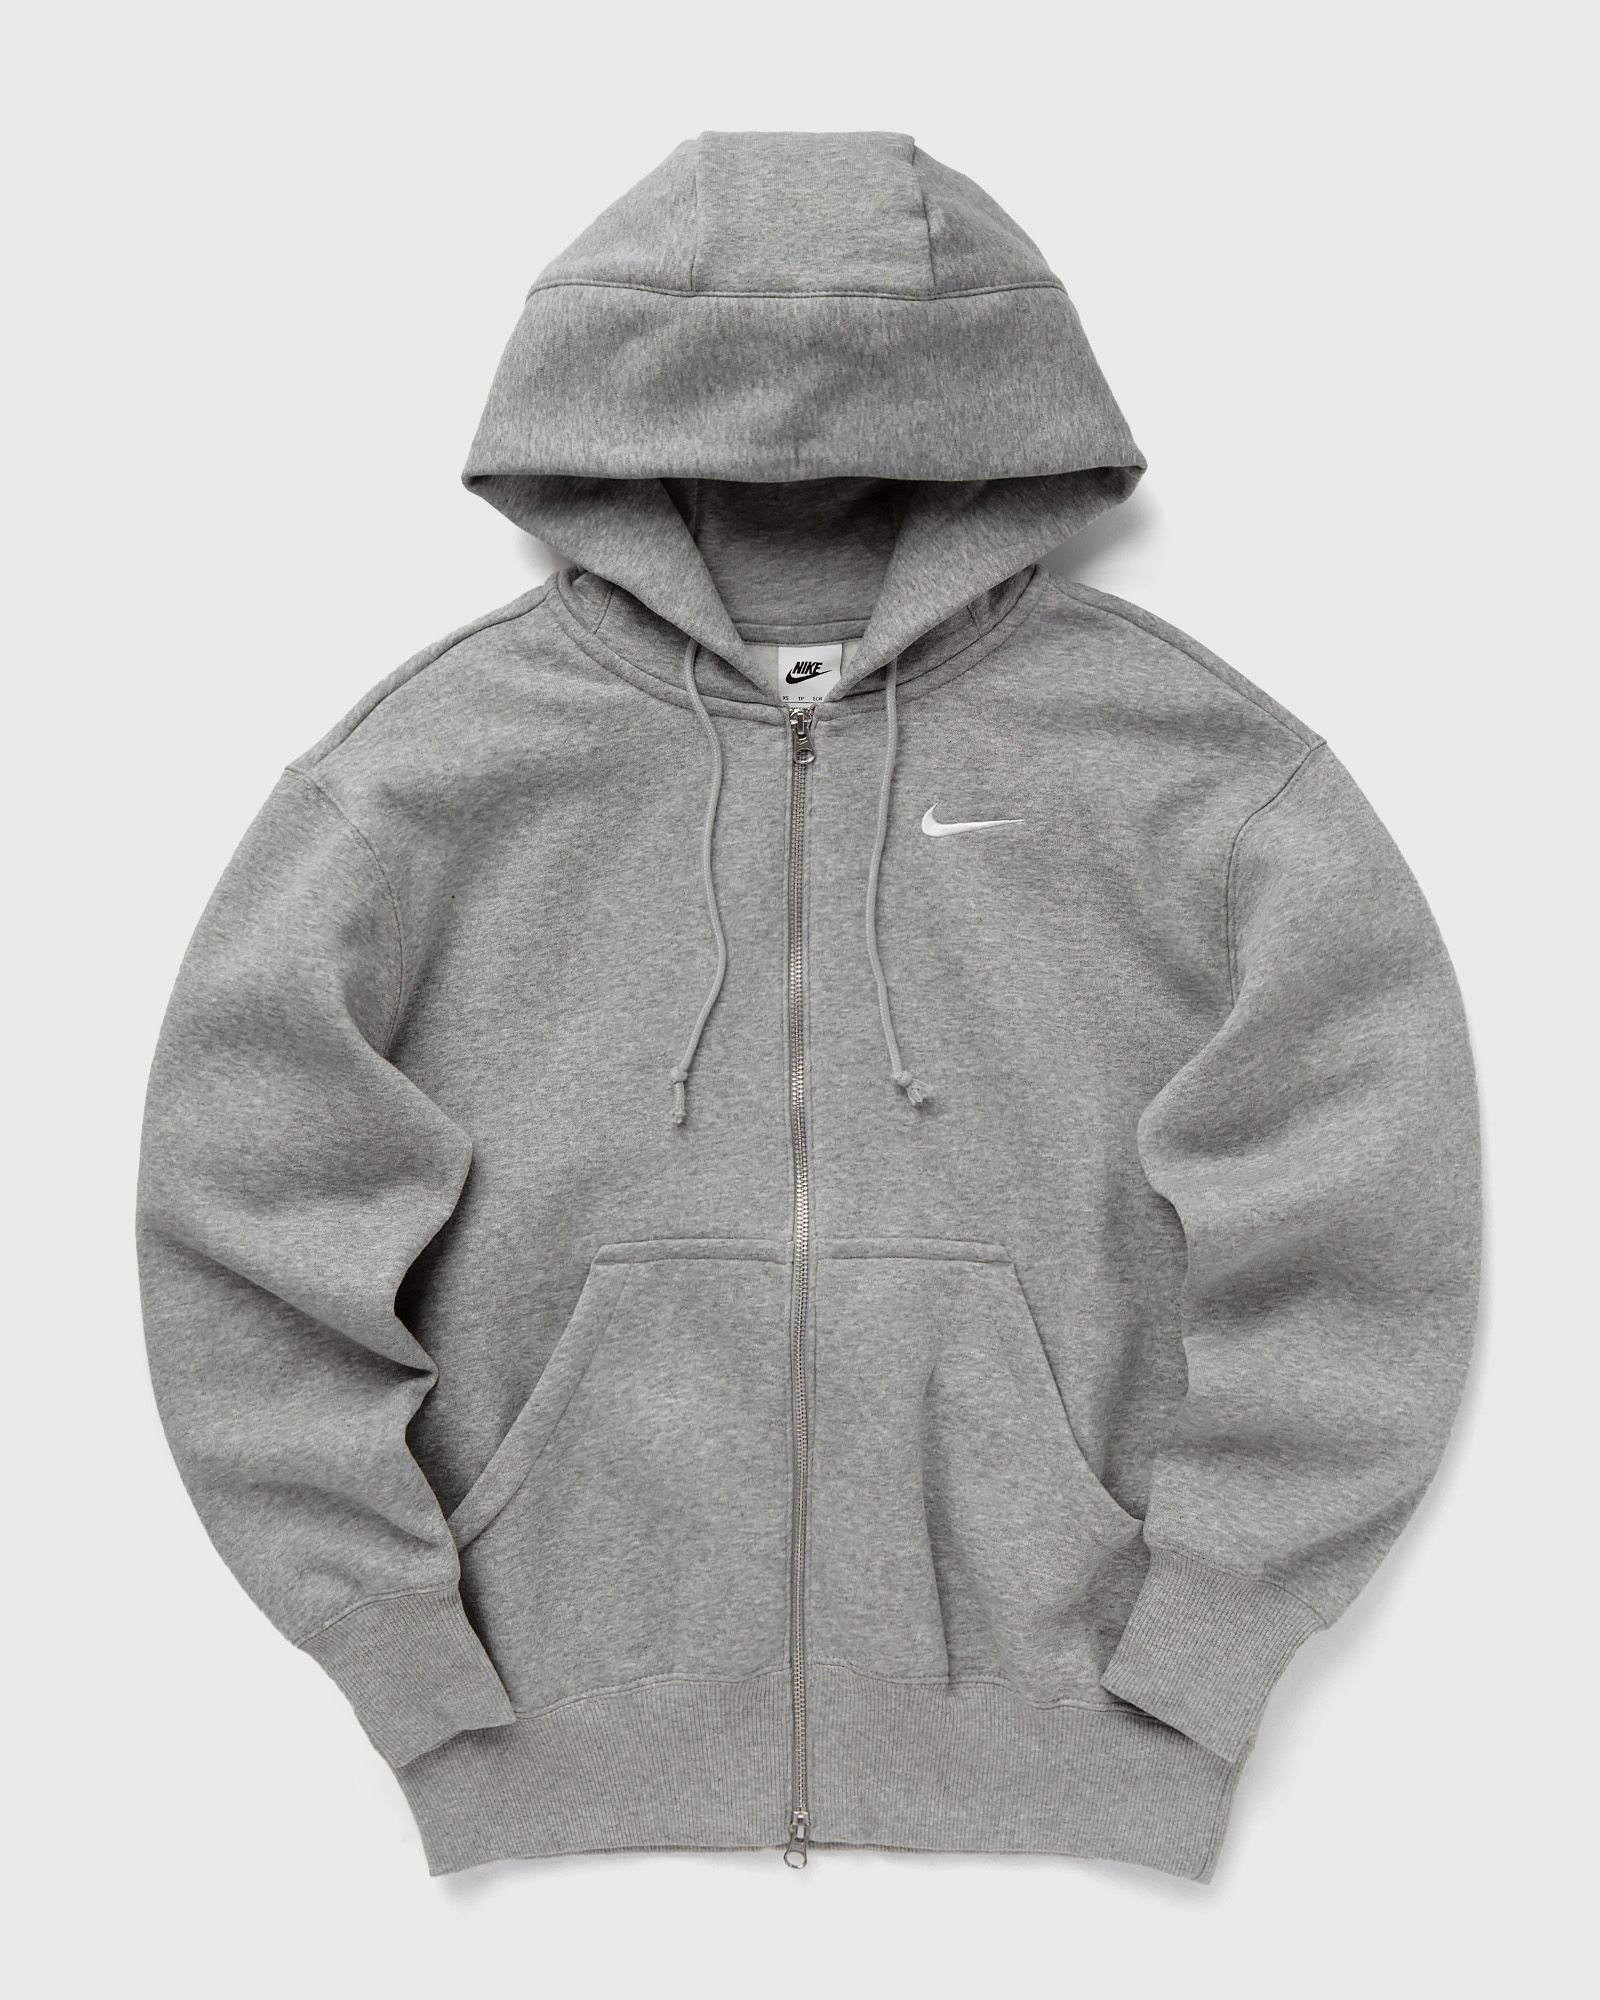 Nike - wmns phoenix fleece oversized full-zip hoodie women hoodies|zippers grey in größe:l